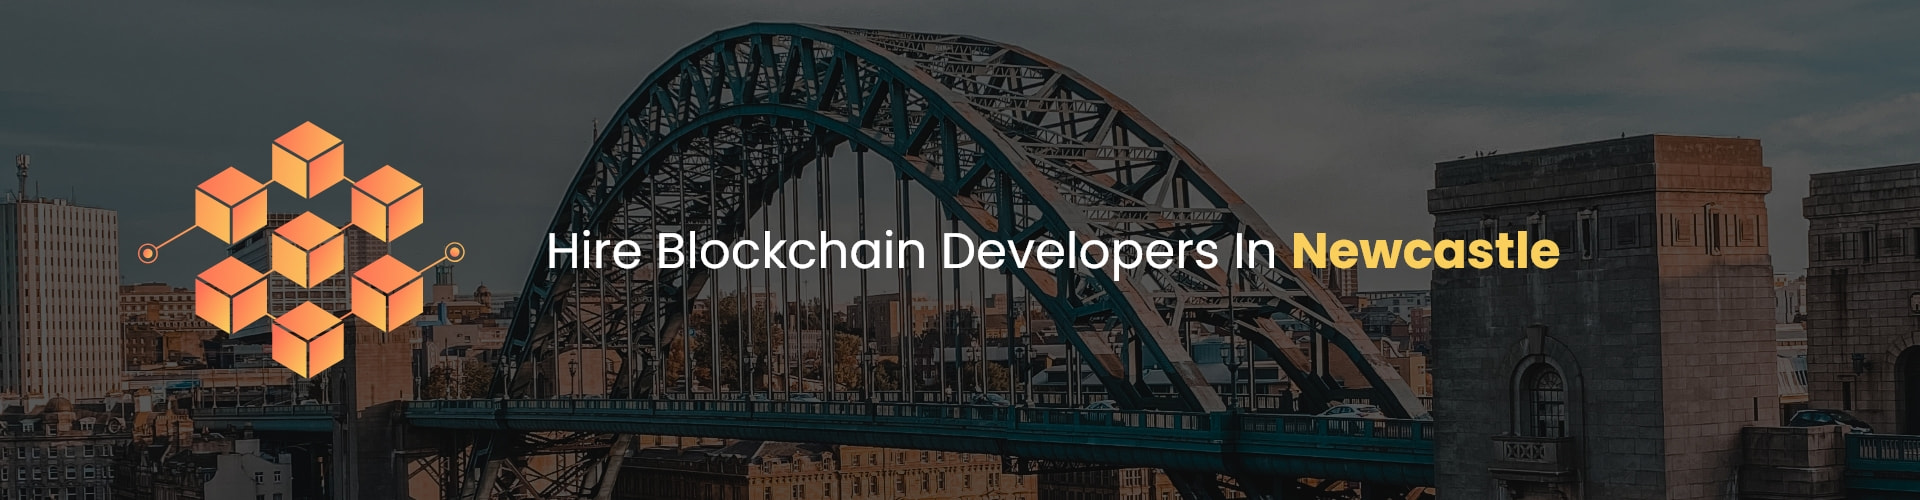 hire blockchain developers in newcastle